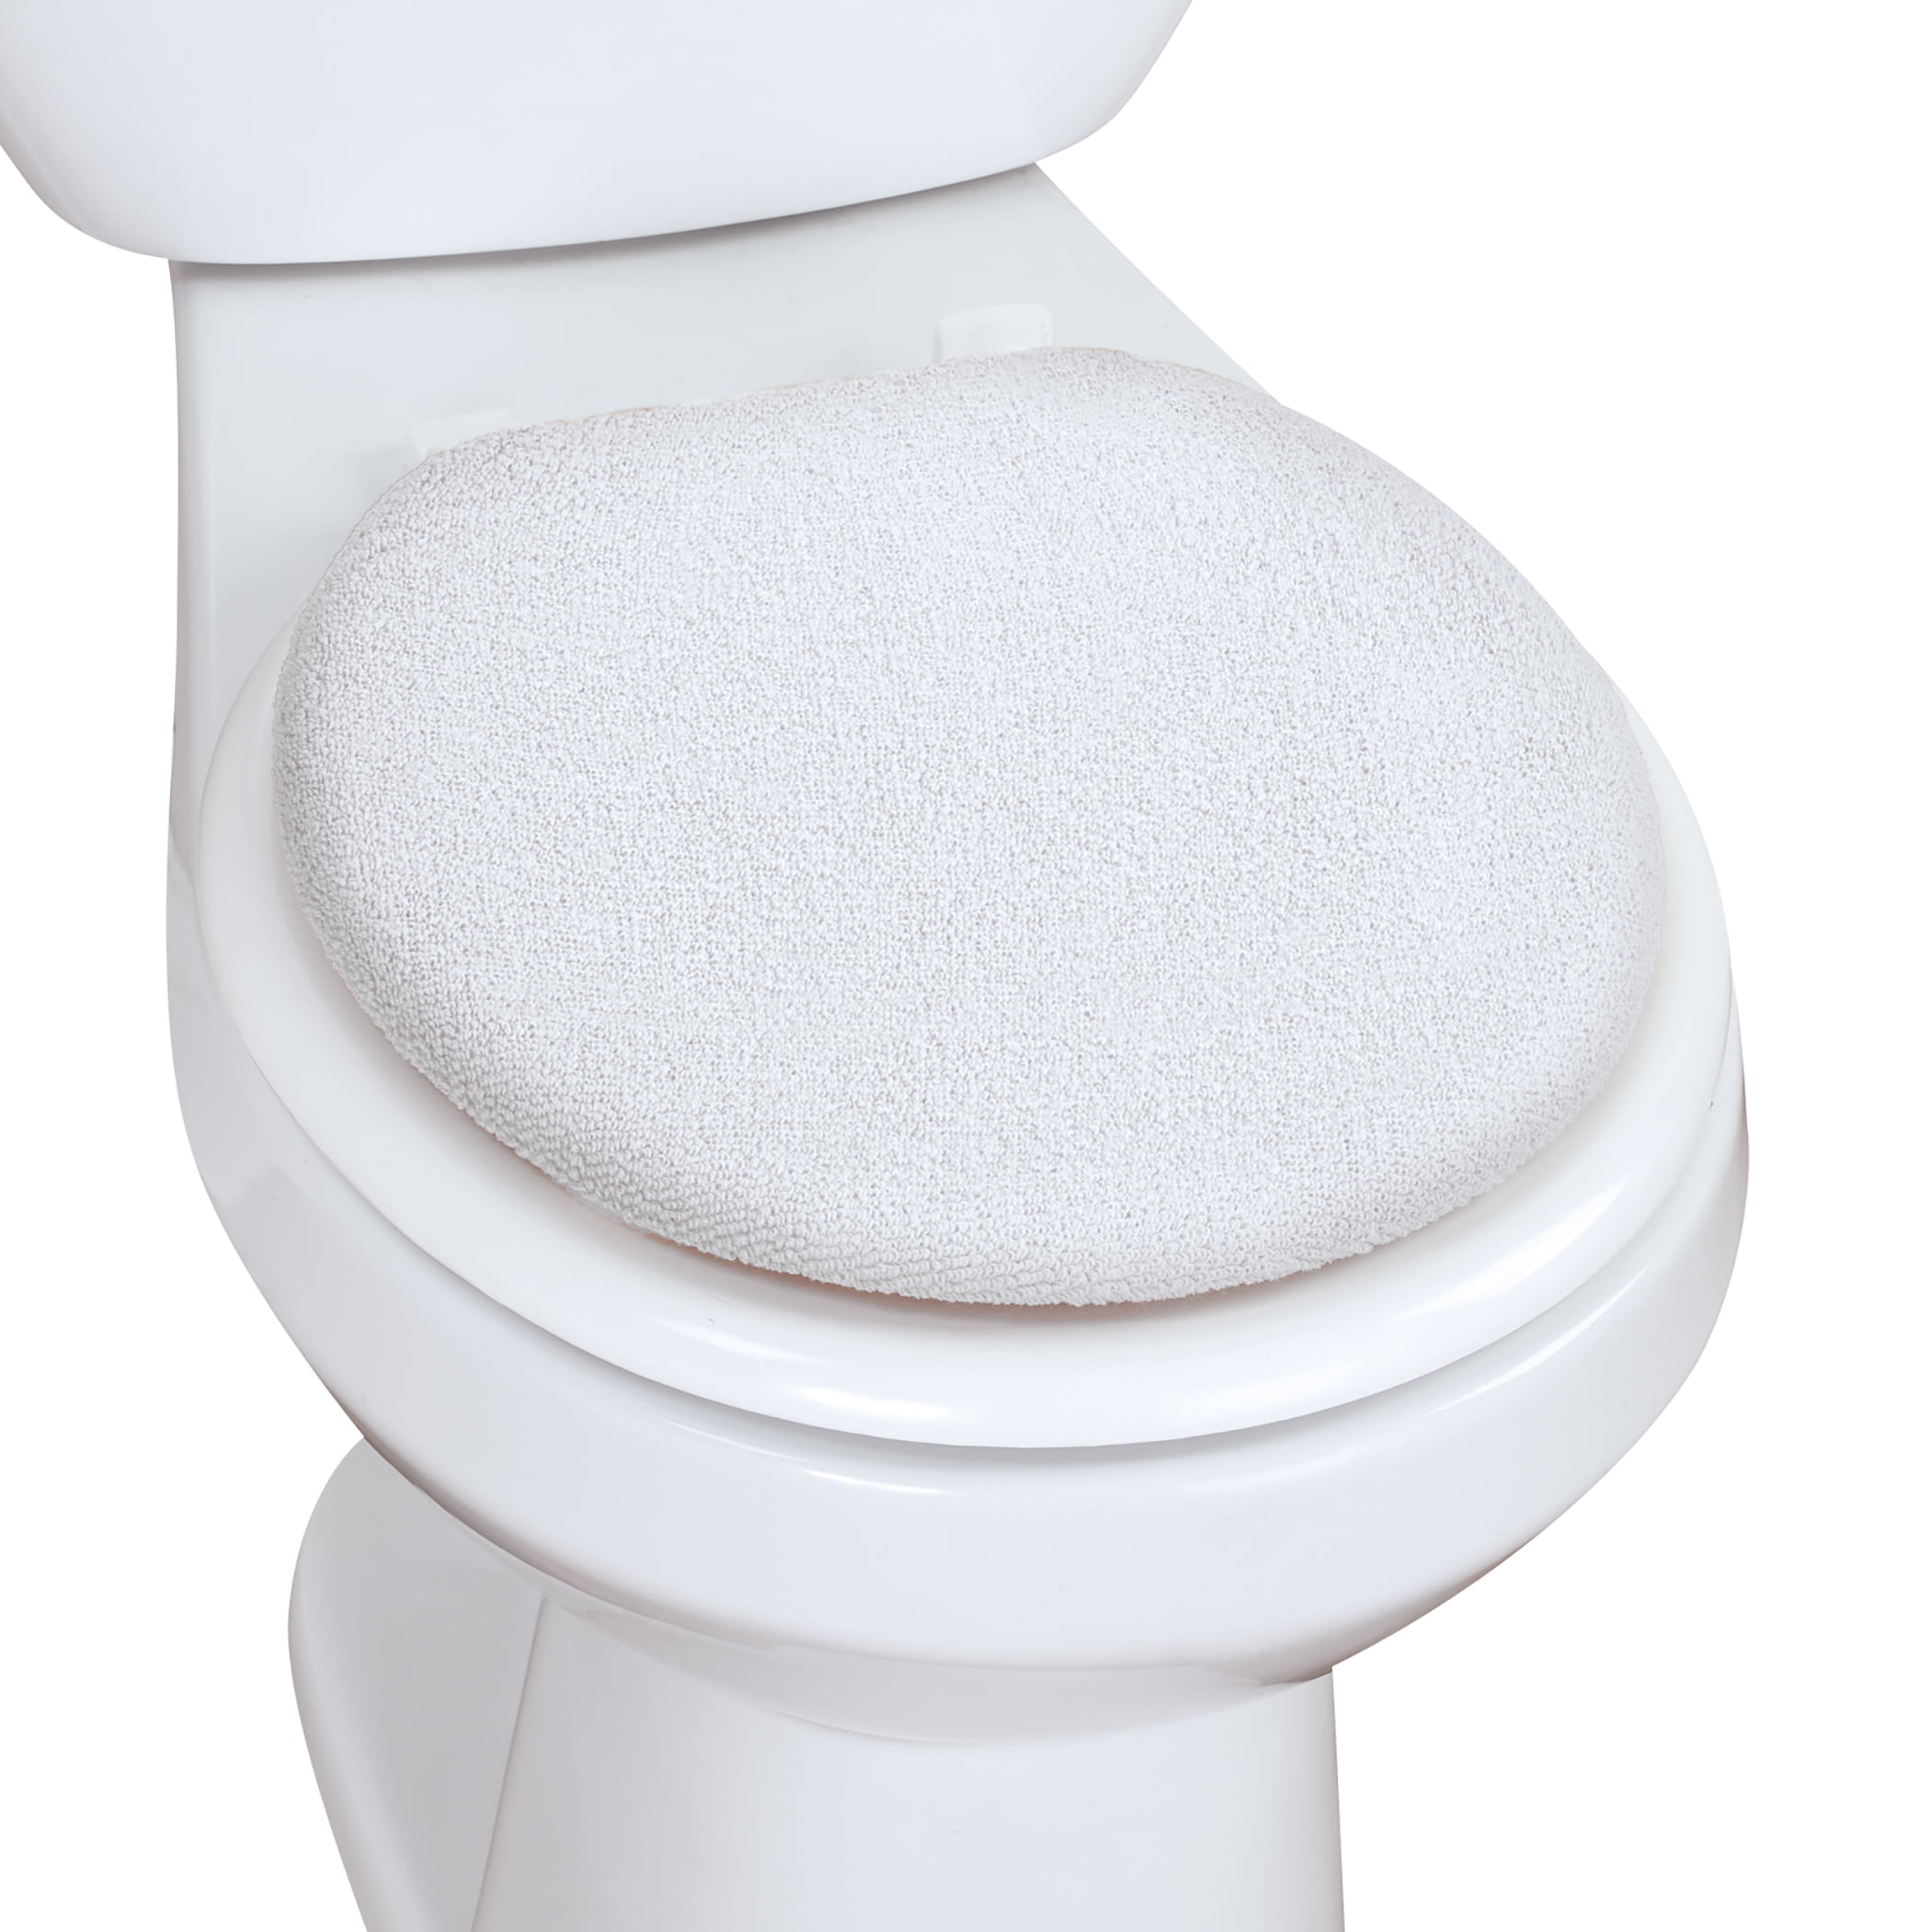 Details about   WHITE 1510100 141-0120 141-0220 141-2120 Eljer PATRIOT SAVOY toilet tank lid top 